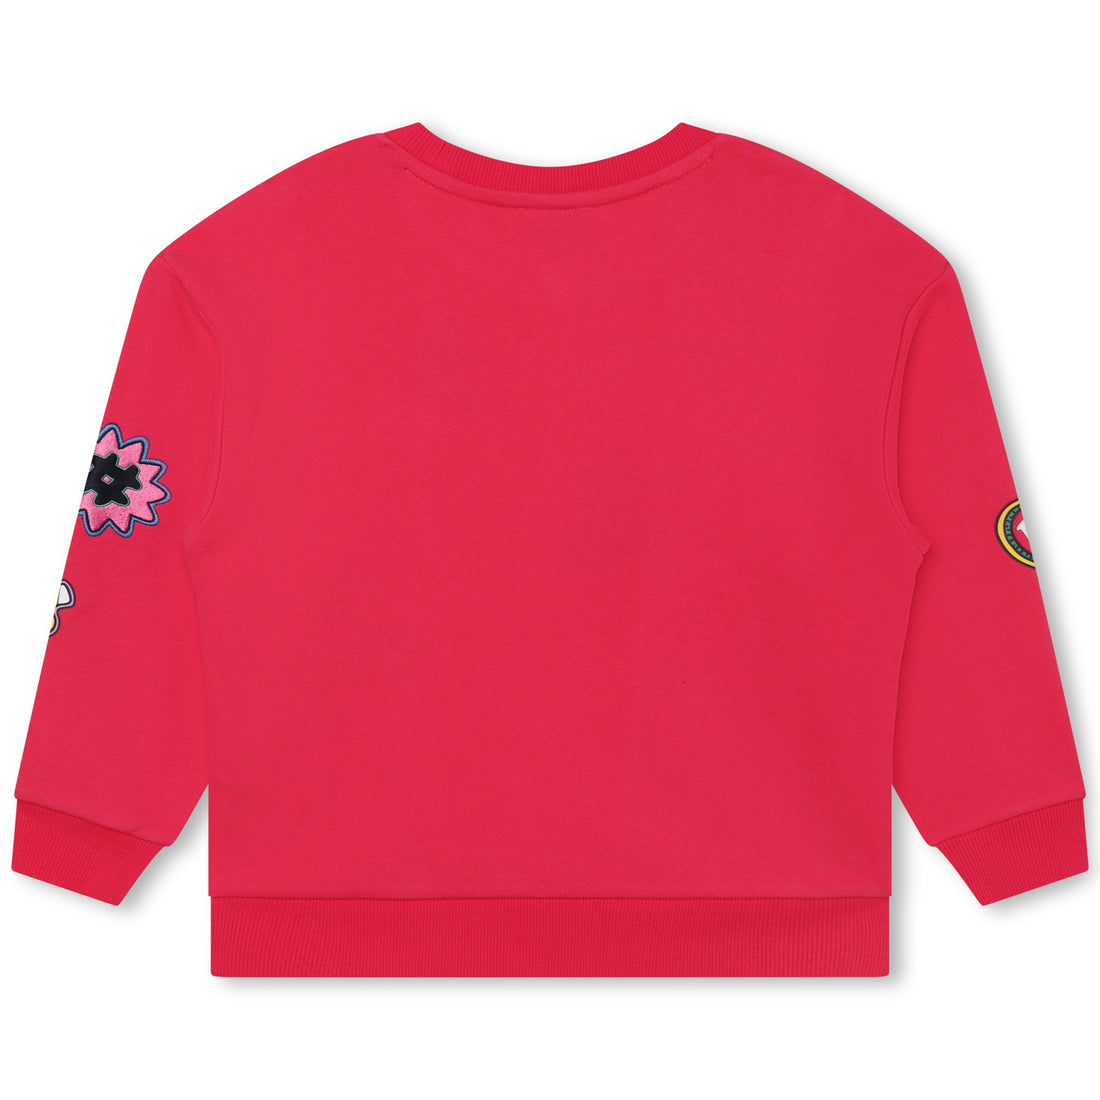 The Marc Jacobs Sweatshirt Style: W15685